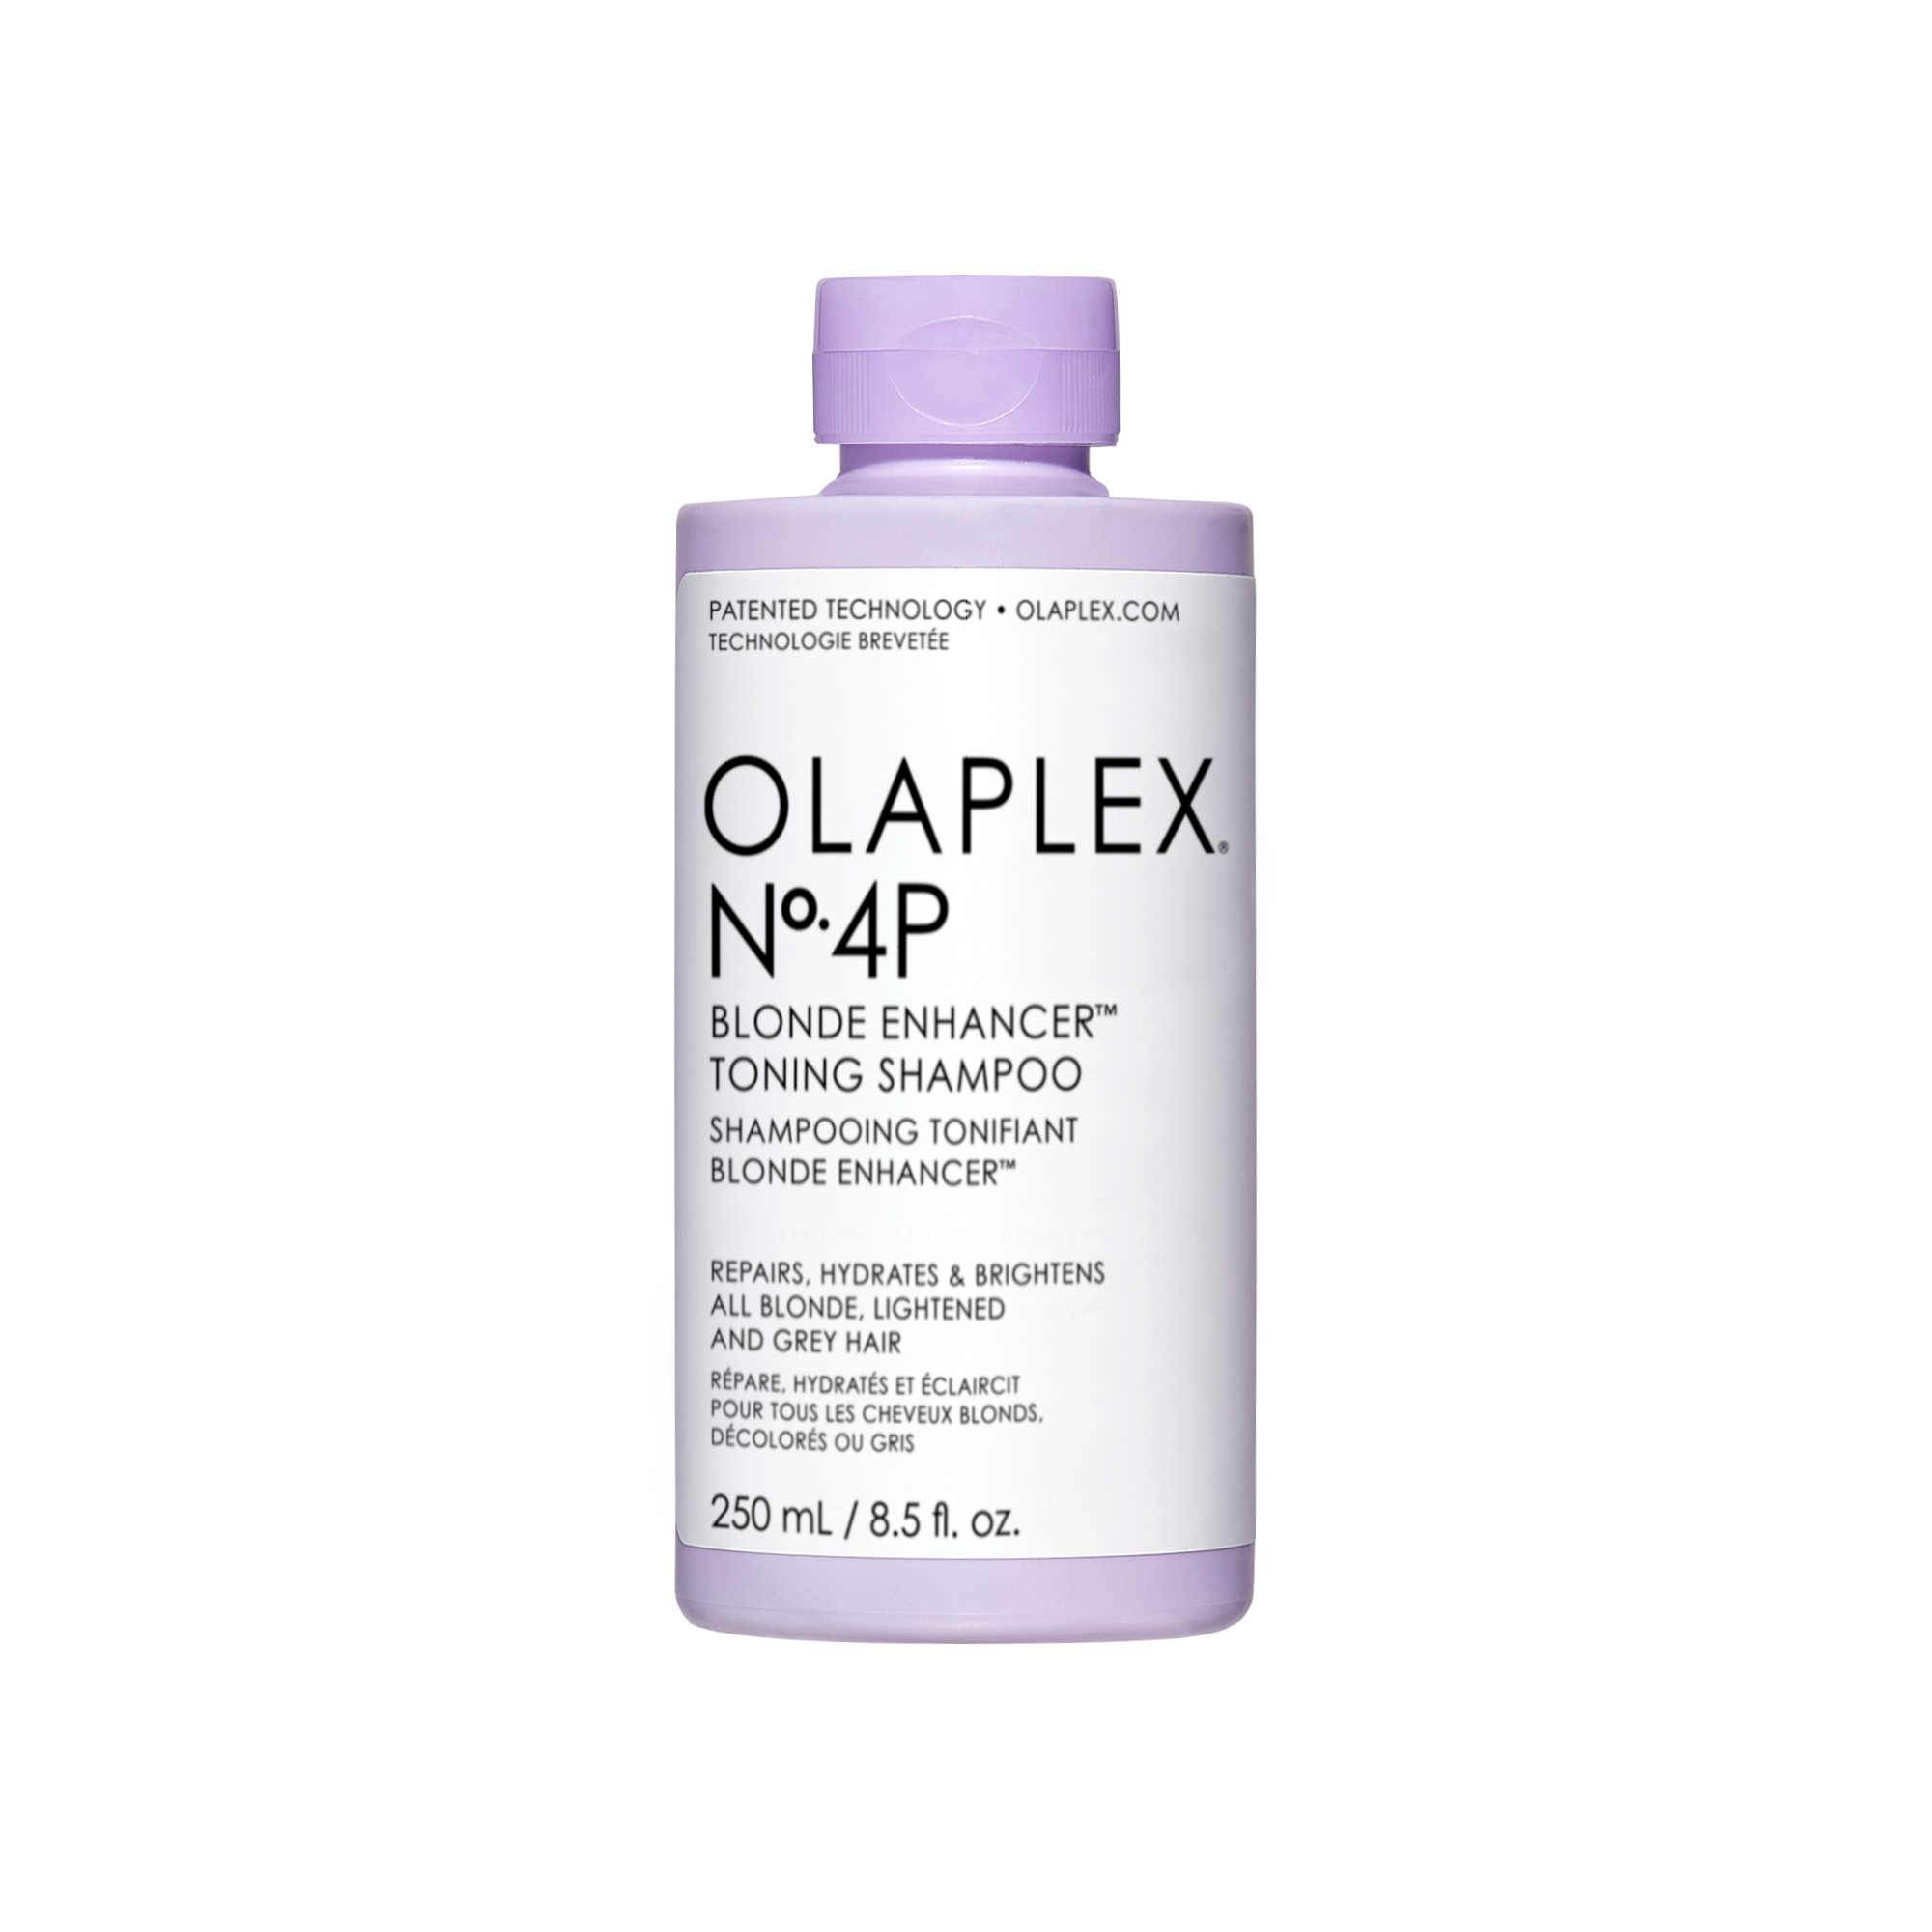 Original OLAPLEX® N°4P Blonde Enhancer Toning Shampoo grid image